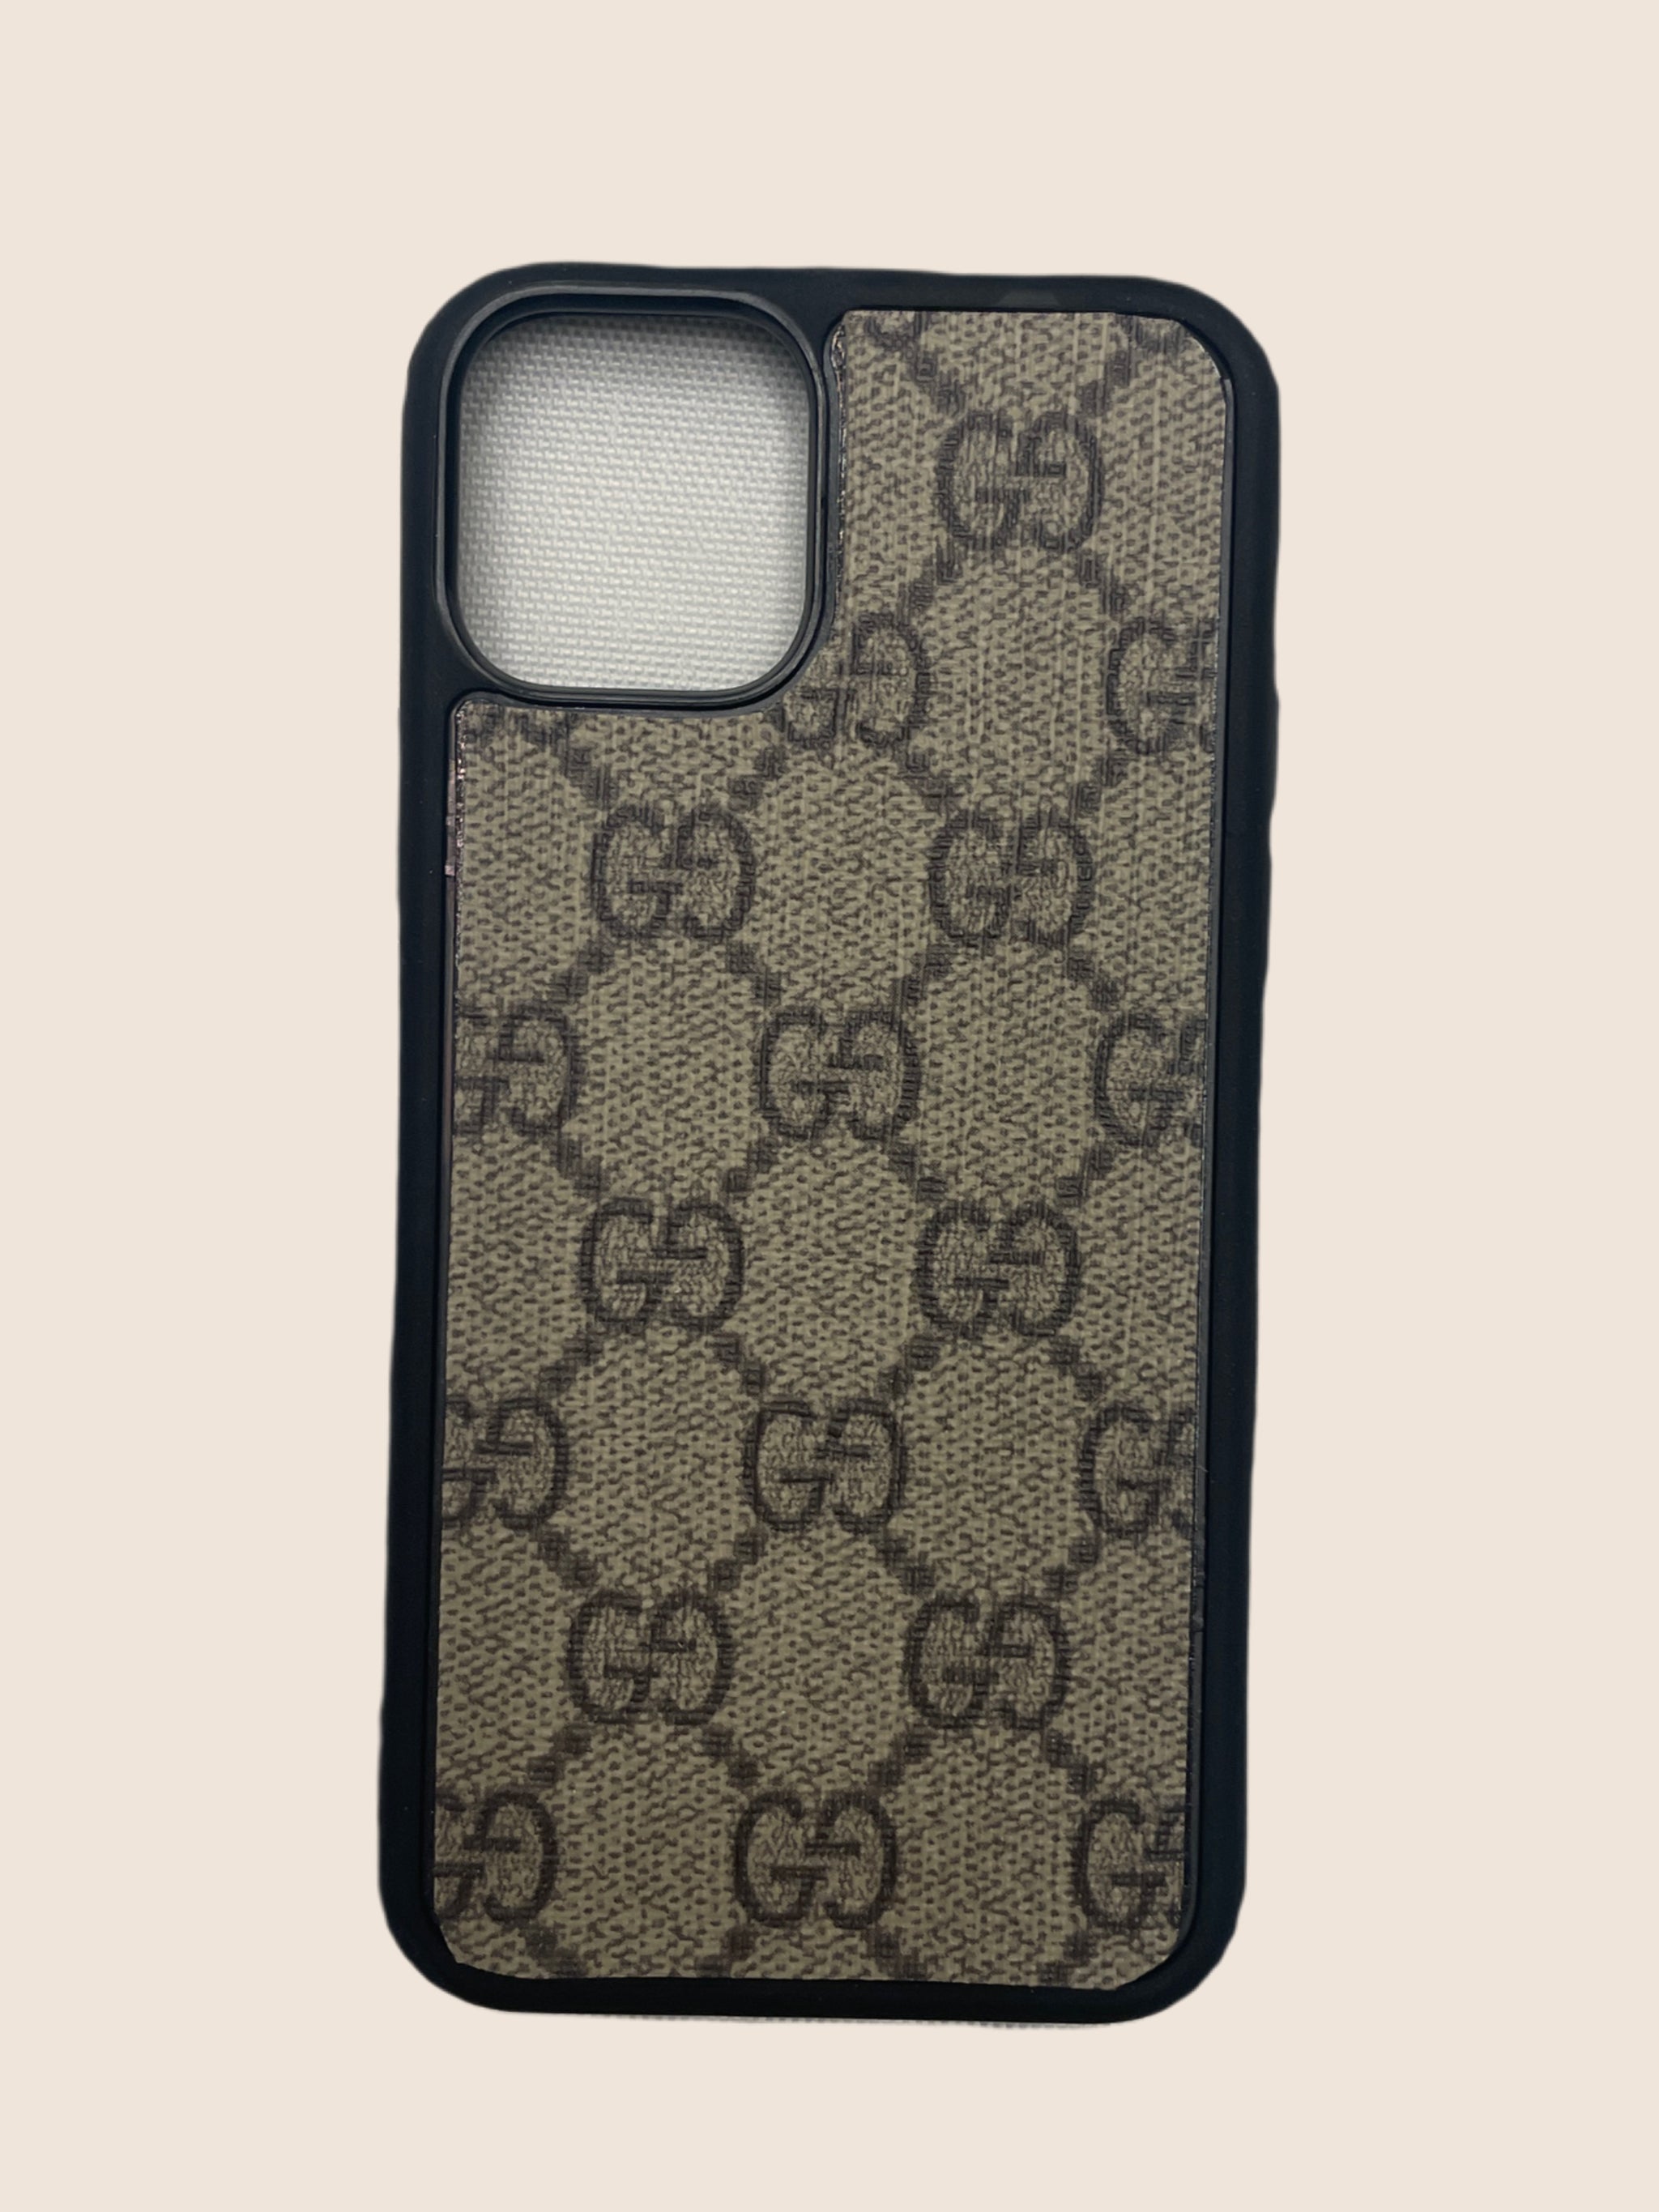 Designer Inspired Phone Cases  Iphone phone cases, Authentic bags, Design  inspiration